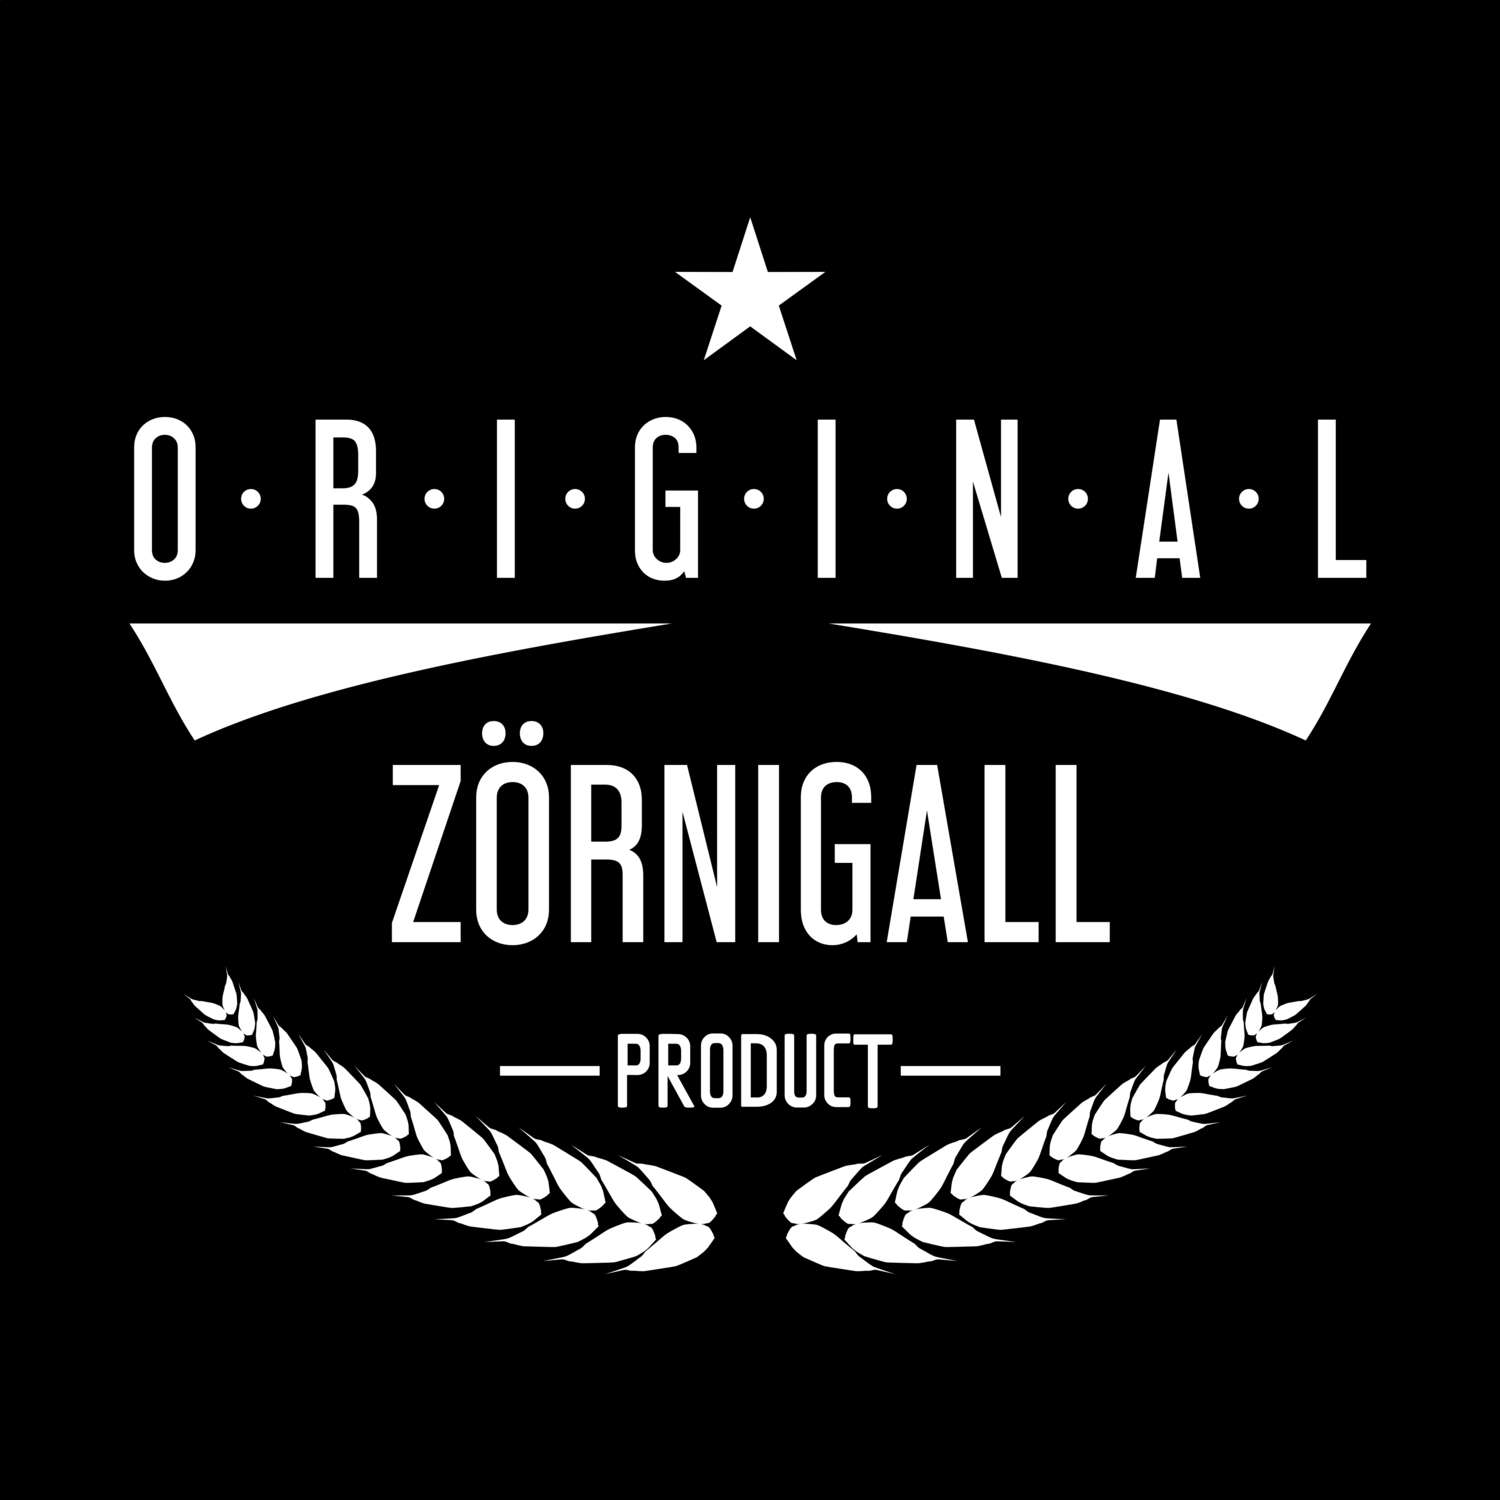 Zörnigall T-Shirt »Original Product«